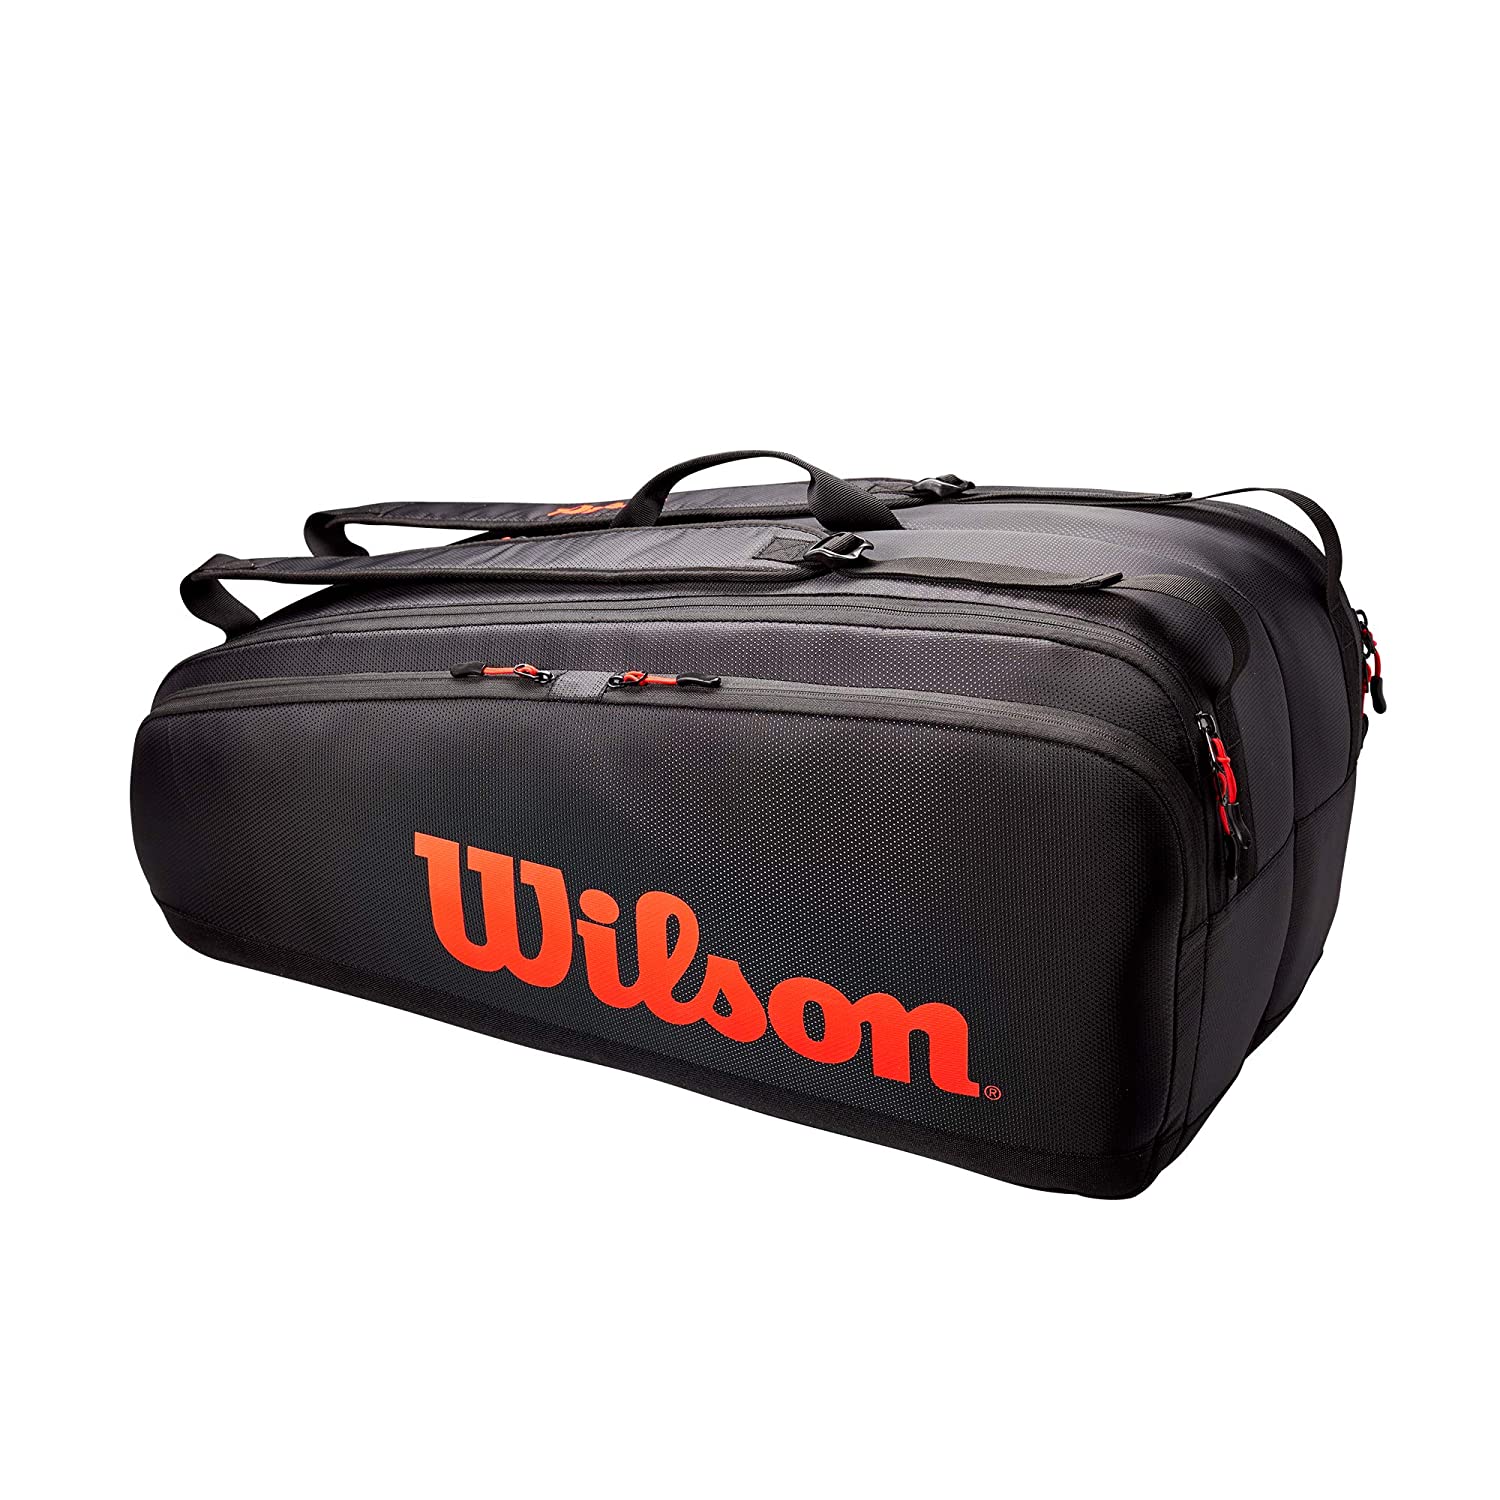 Wlson Tour 12 Tennis Bag, Red/Black - Best Price online Prokicksports.com